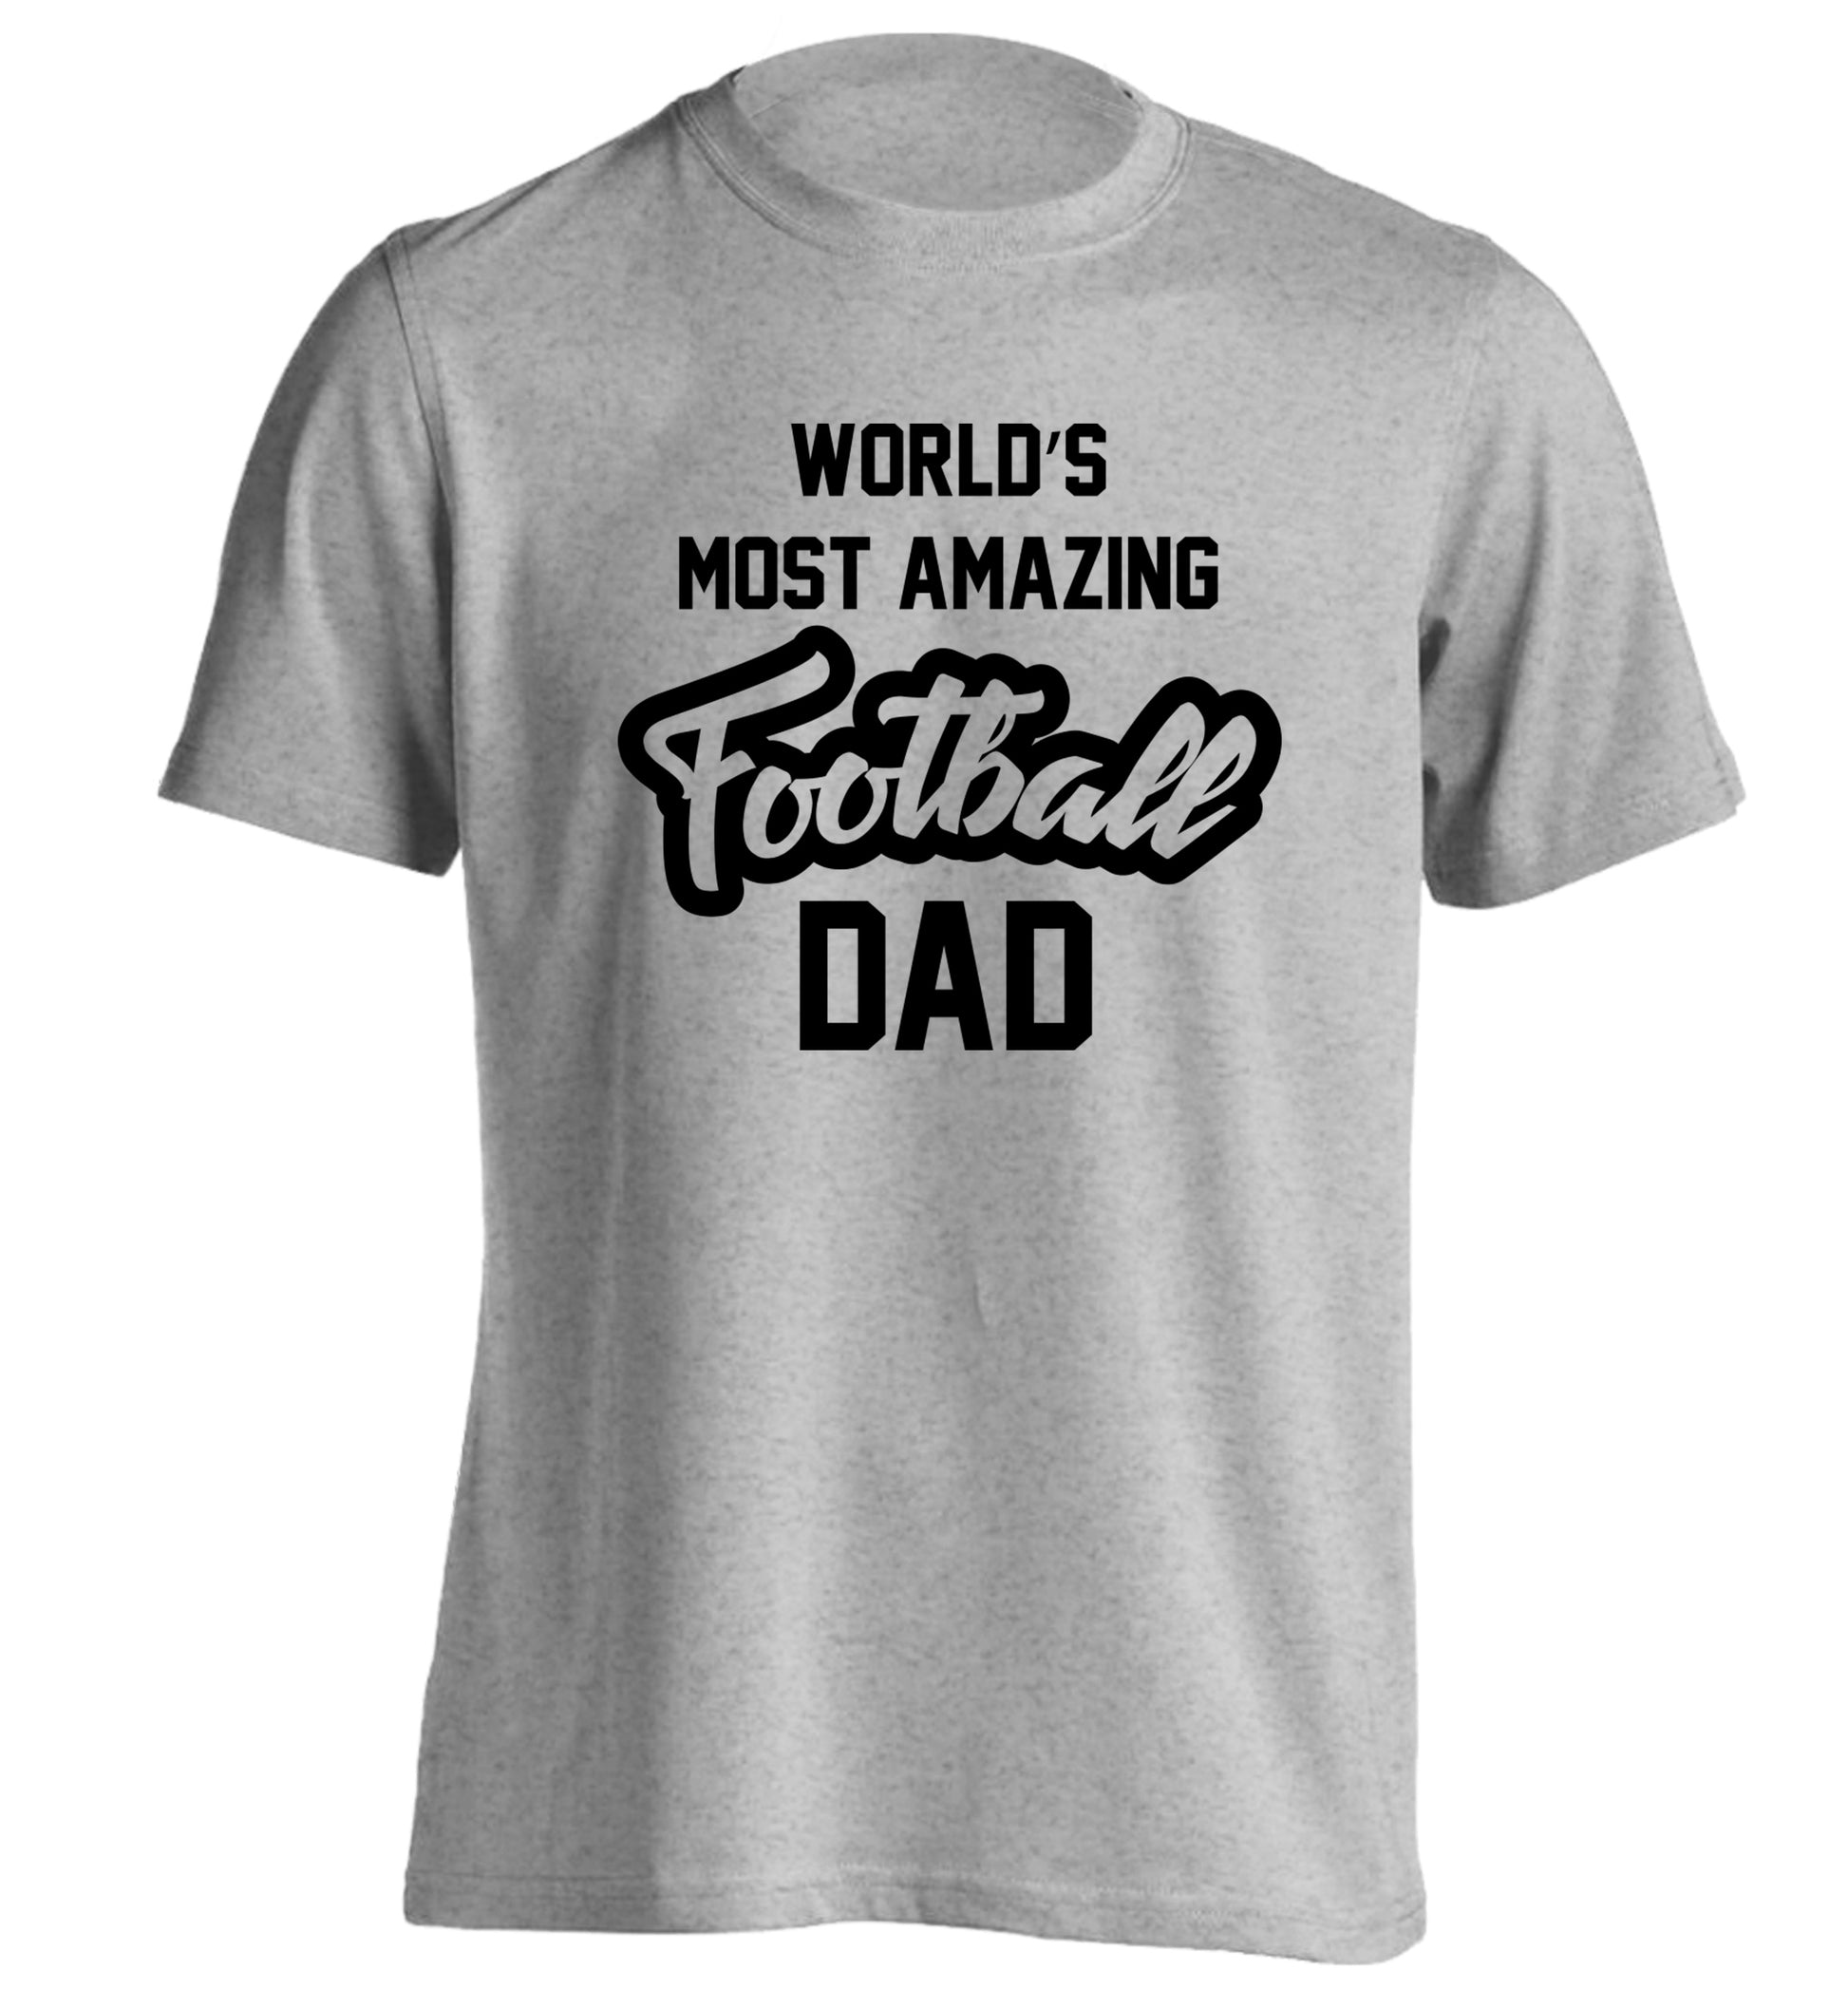 Worlds most amazing football dad adults unisexgrey Tshirt 2XL